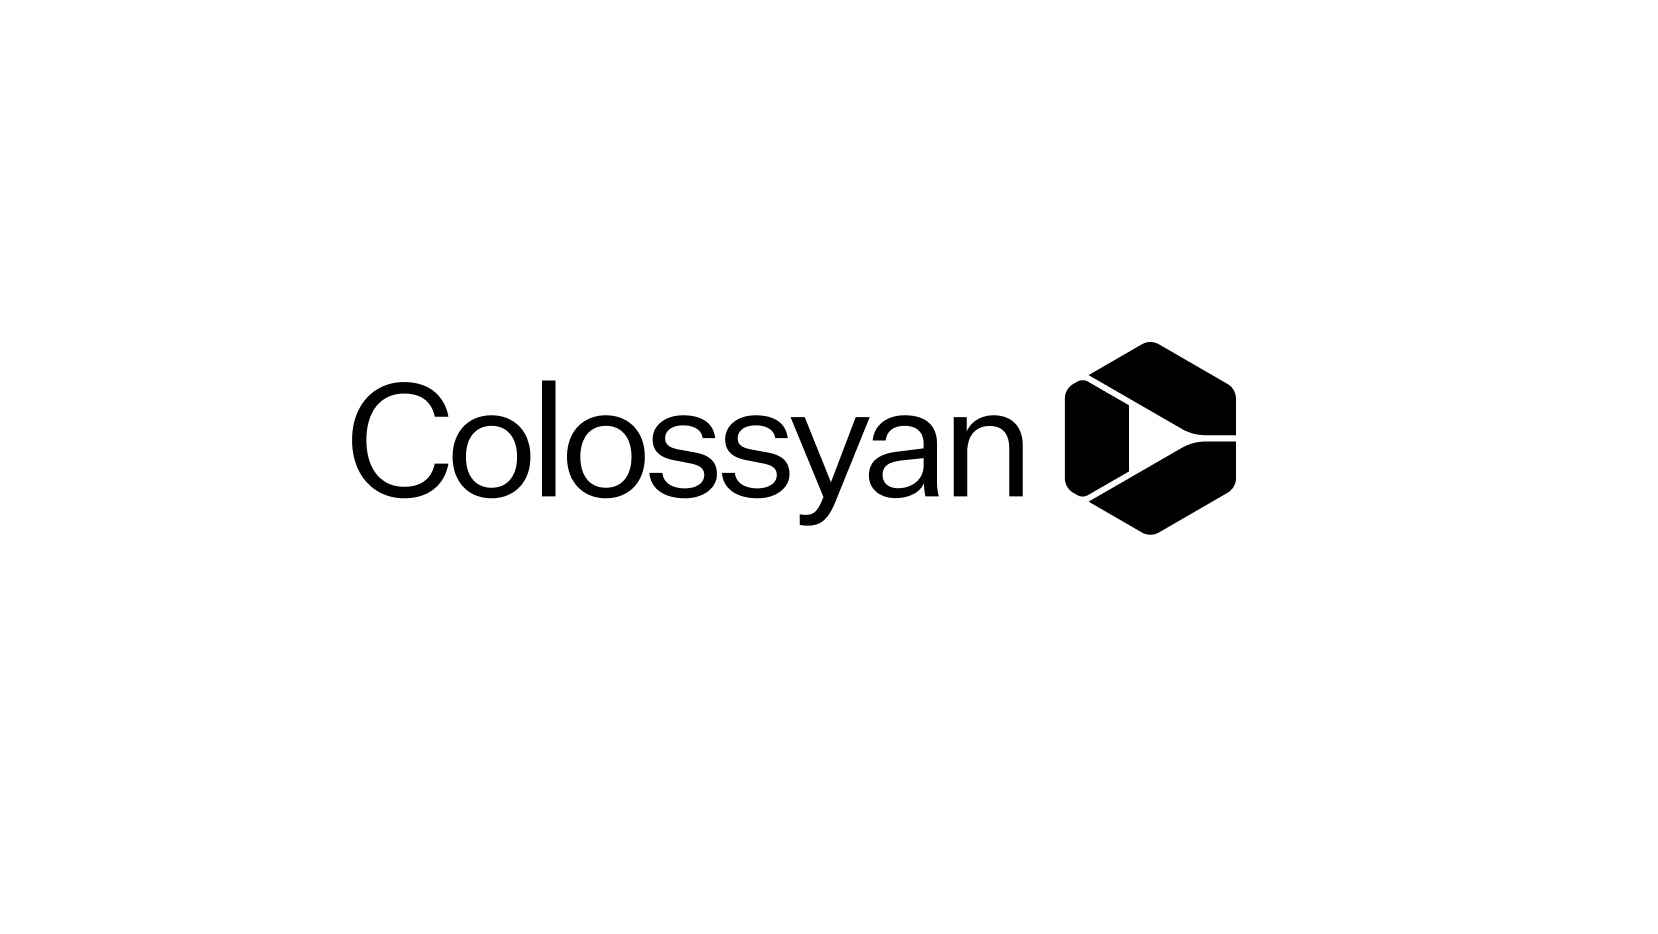 www.colossyan.com